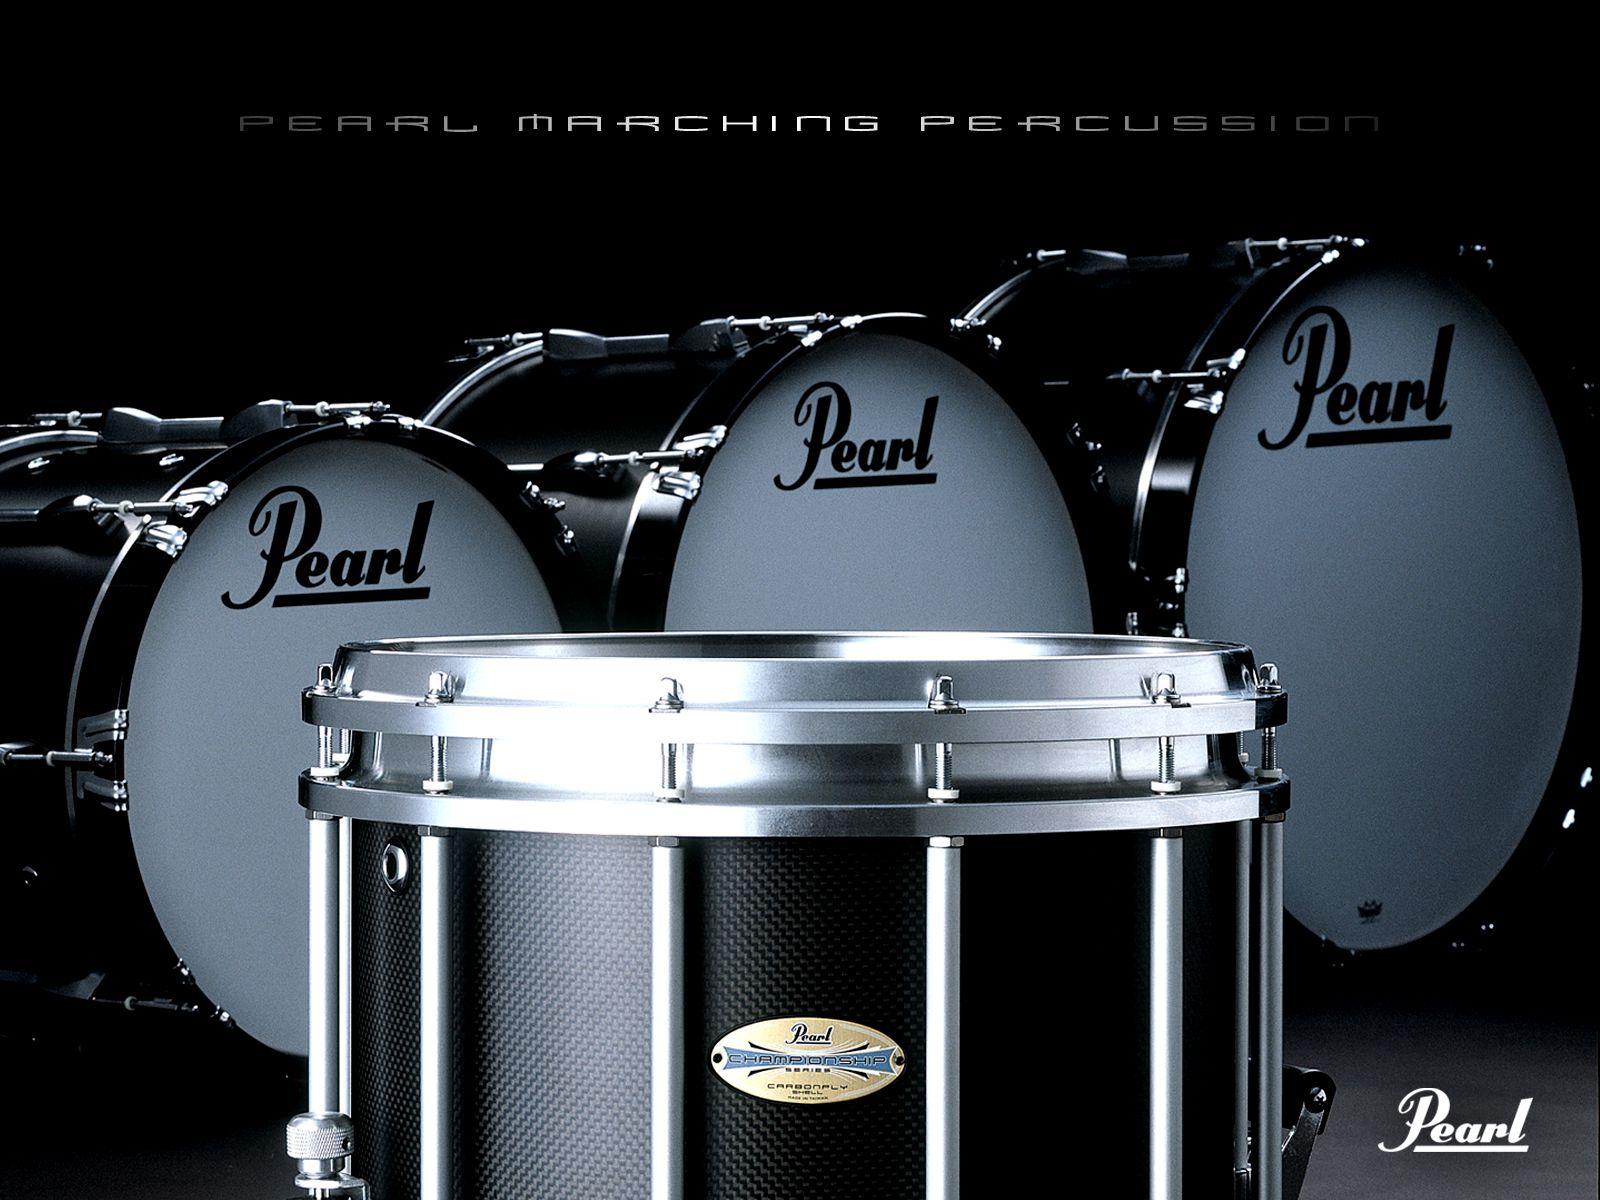 Wallpaper Drums De Pearl Taringa 1600x1200 #drums